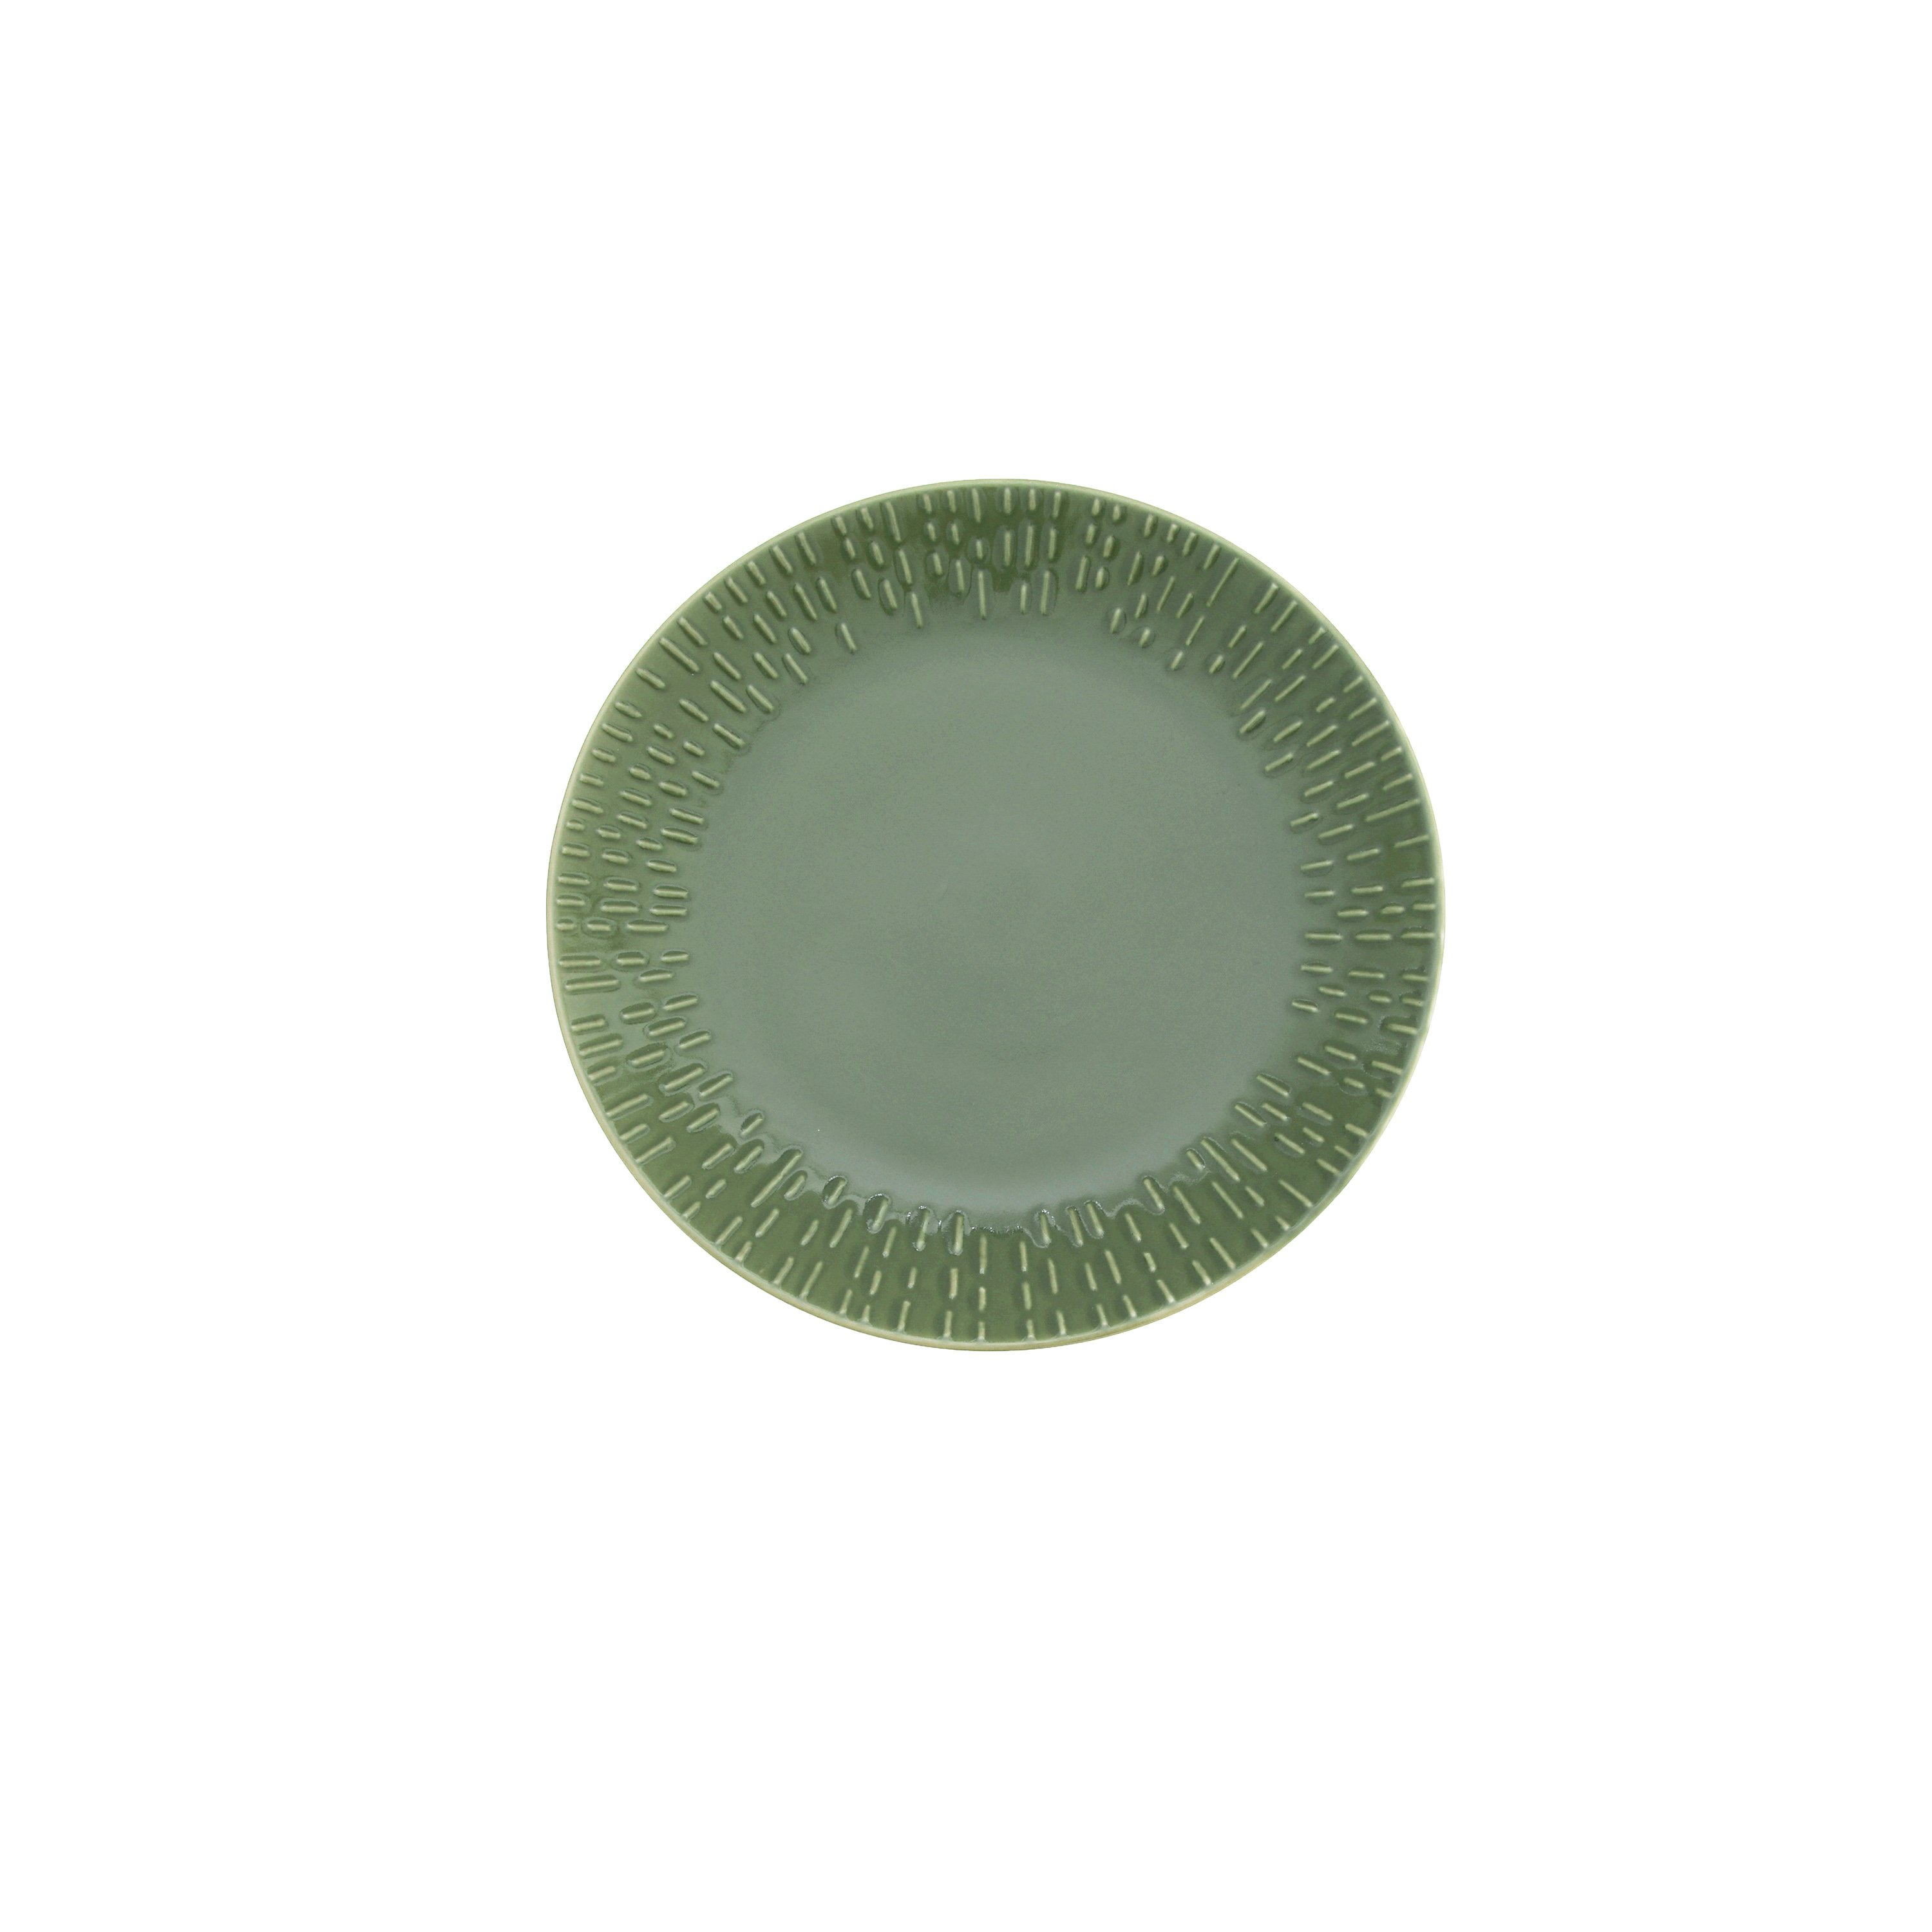 Aida - Life in Colour - Confetti - Olive dessert plate w/relief porcelain (13402)